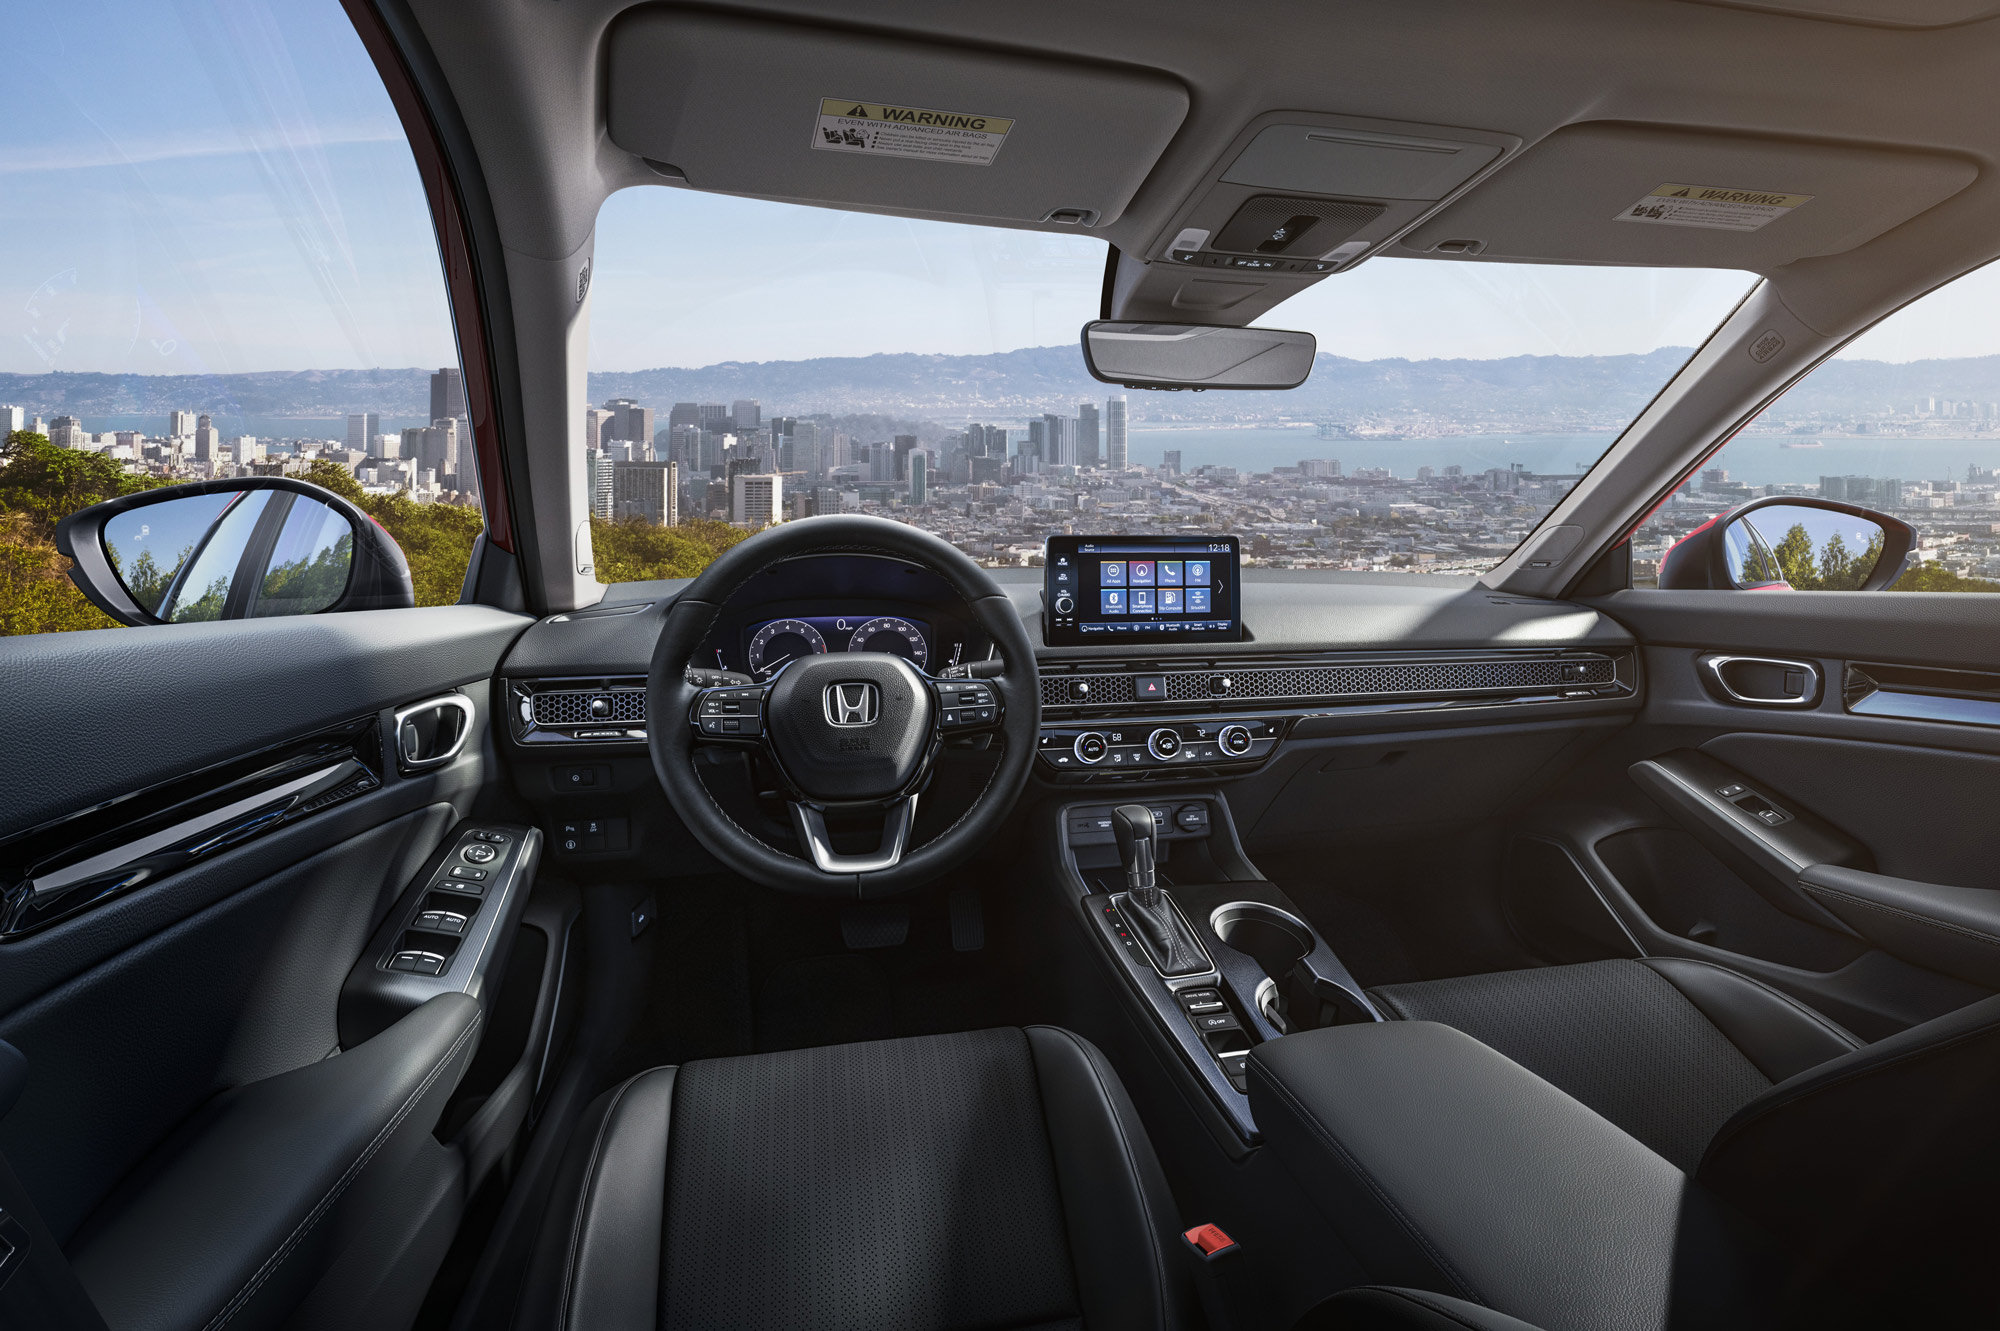 2022 Honda Civic Sedan Touring interior with city view